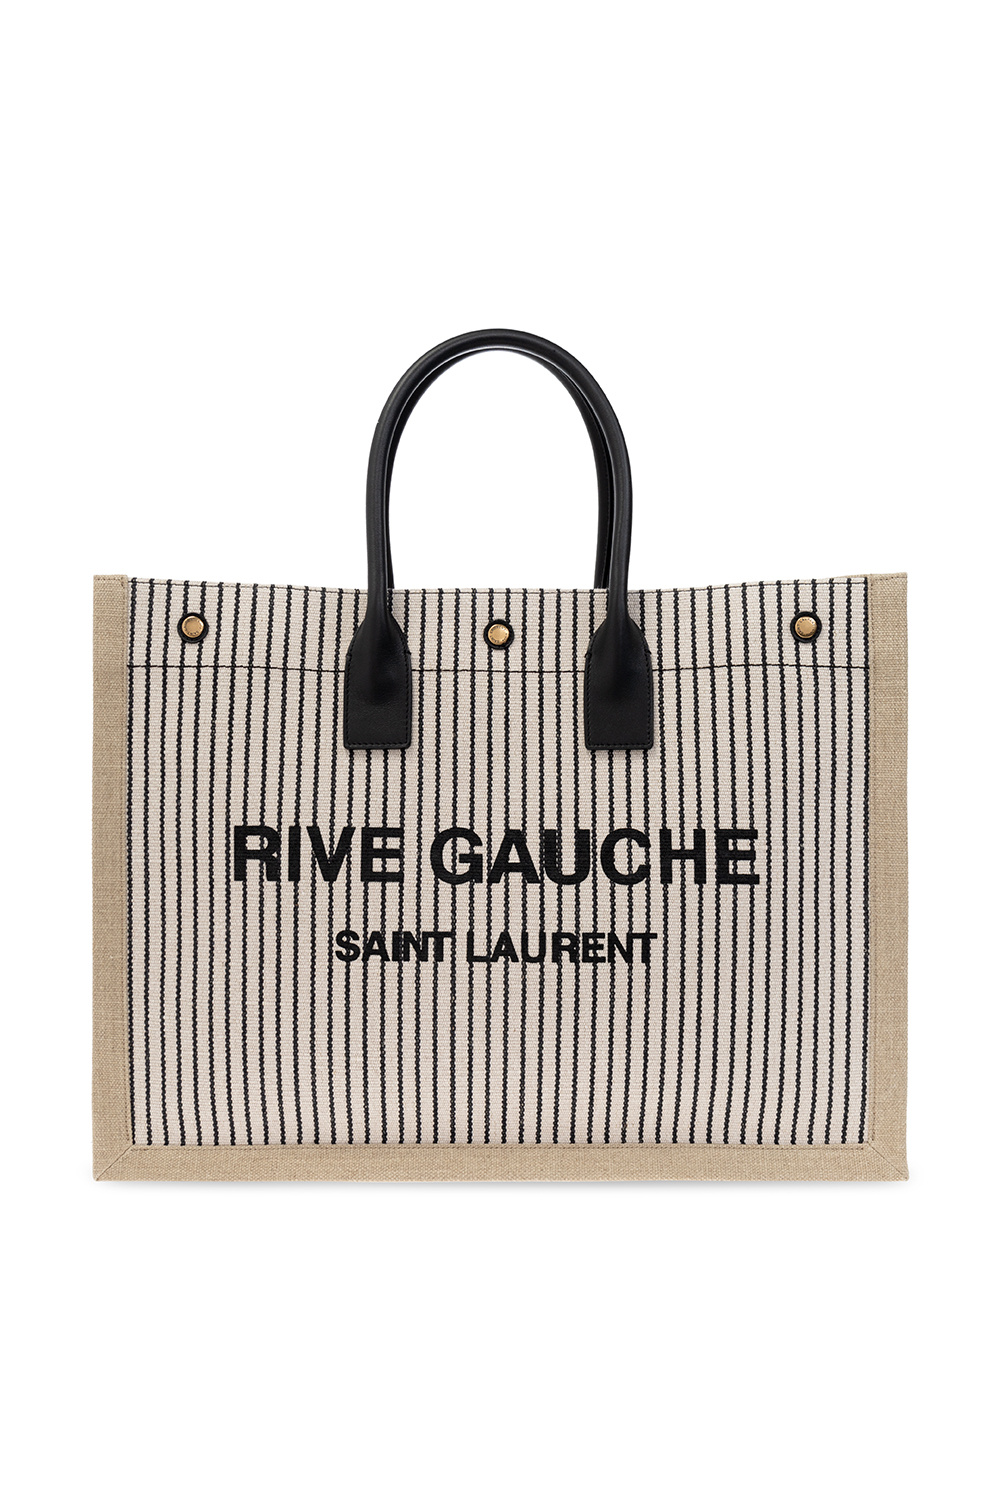 Yves Saint Laurent Rive Gauche Muse 2 Bag - Black Handle Bags, Handbags -  YSLRG50402